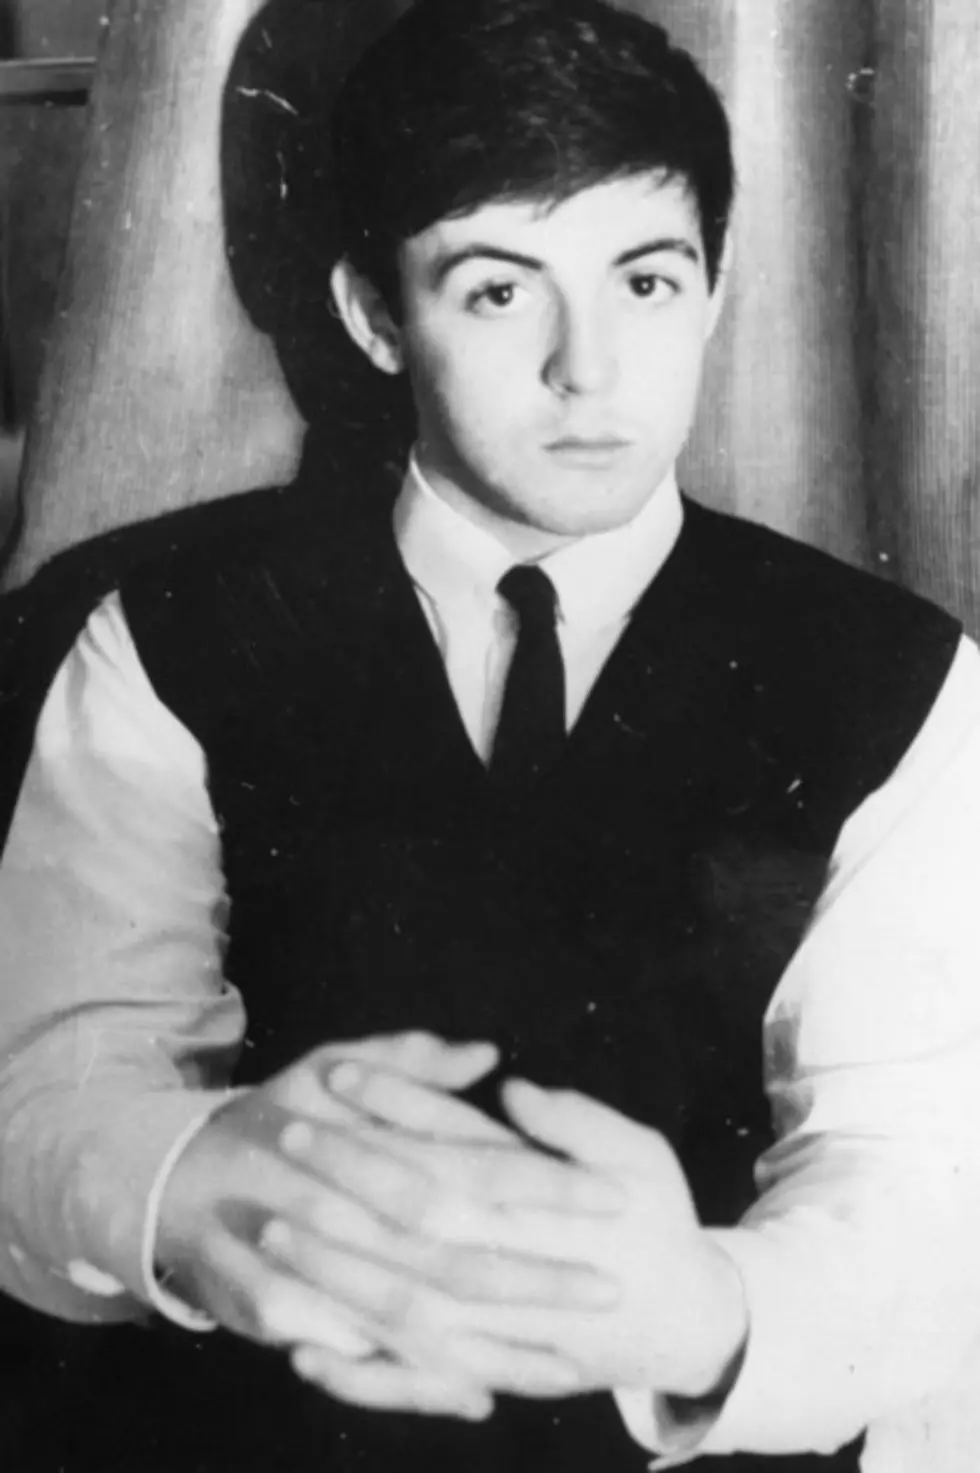 McCartney Tribute Album Is Due November 18th [AUDIO]